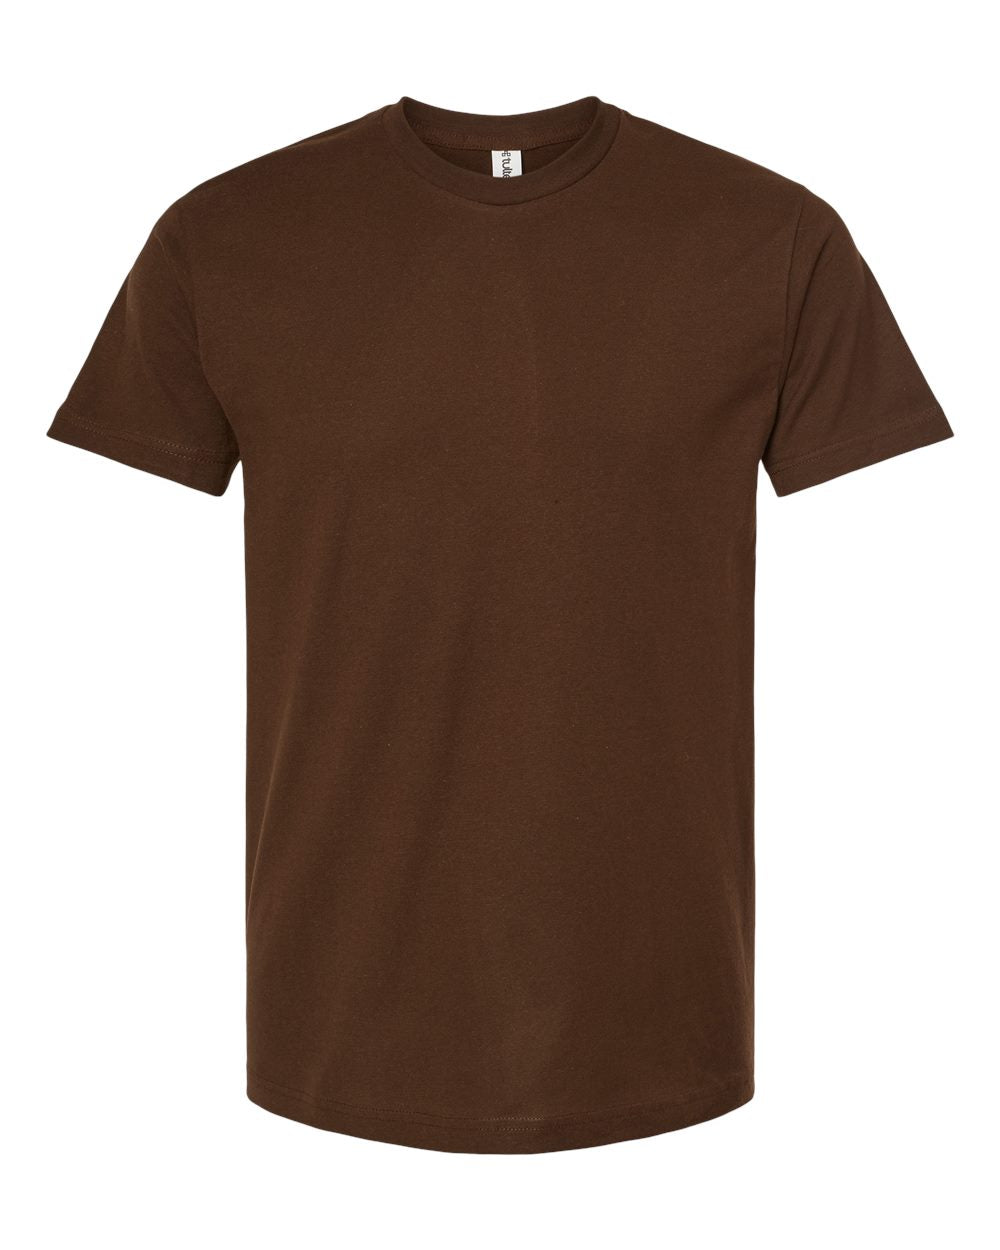 Pretreated Tultex 202 Unisex Fine Jersey T-Shirt - Brown